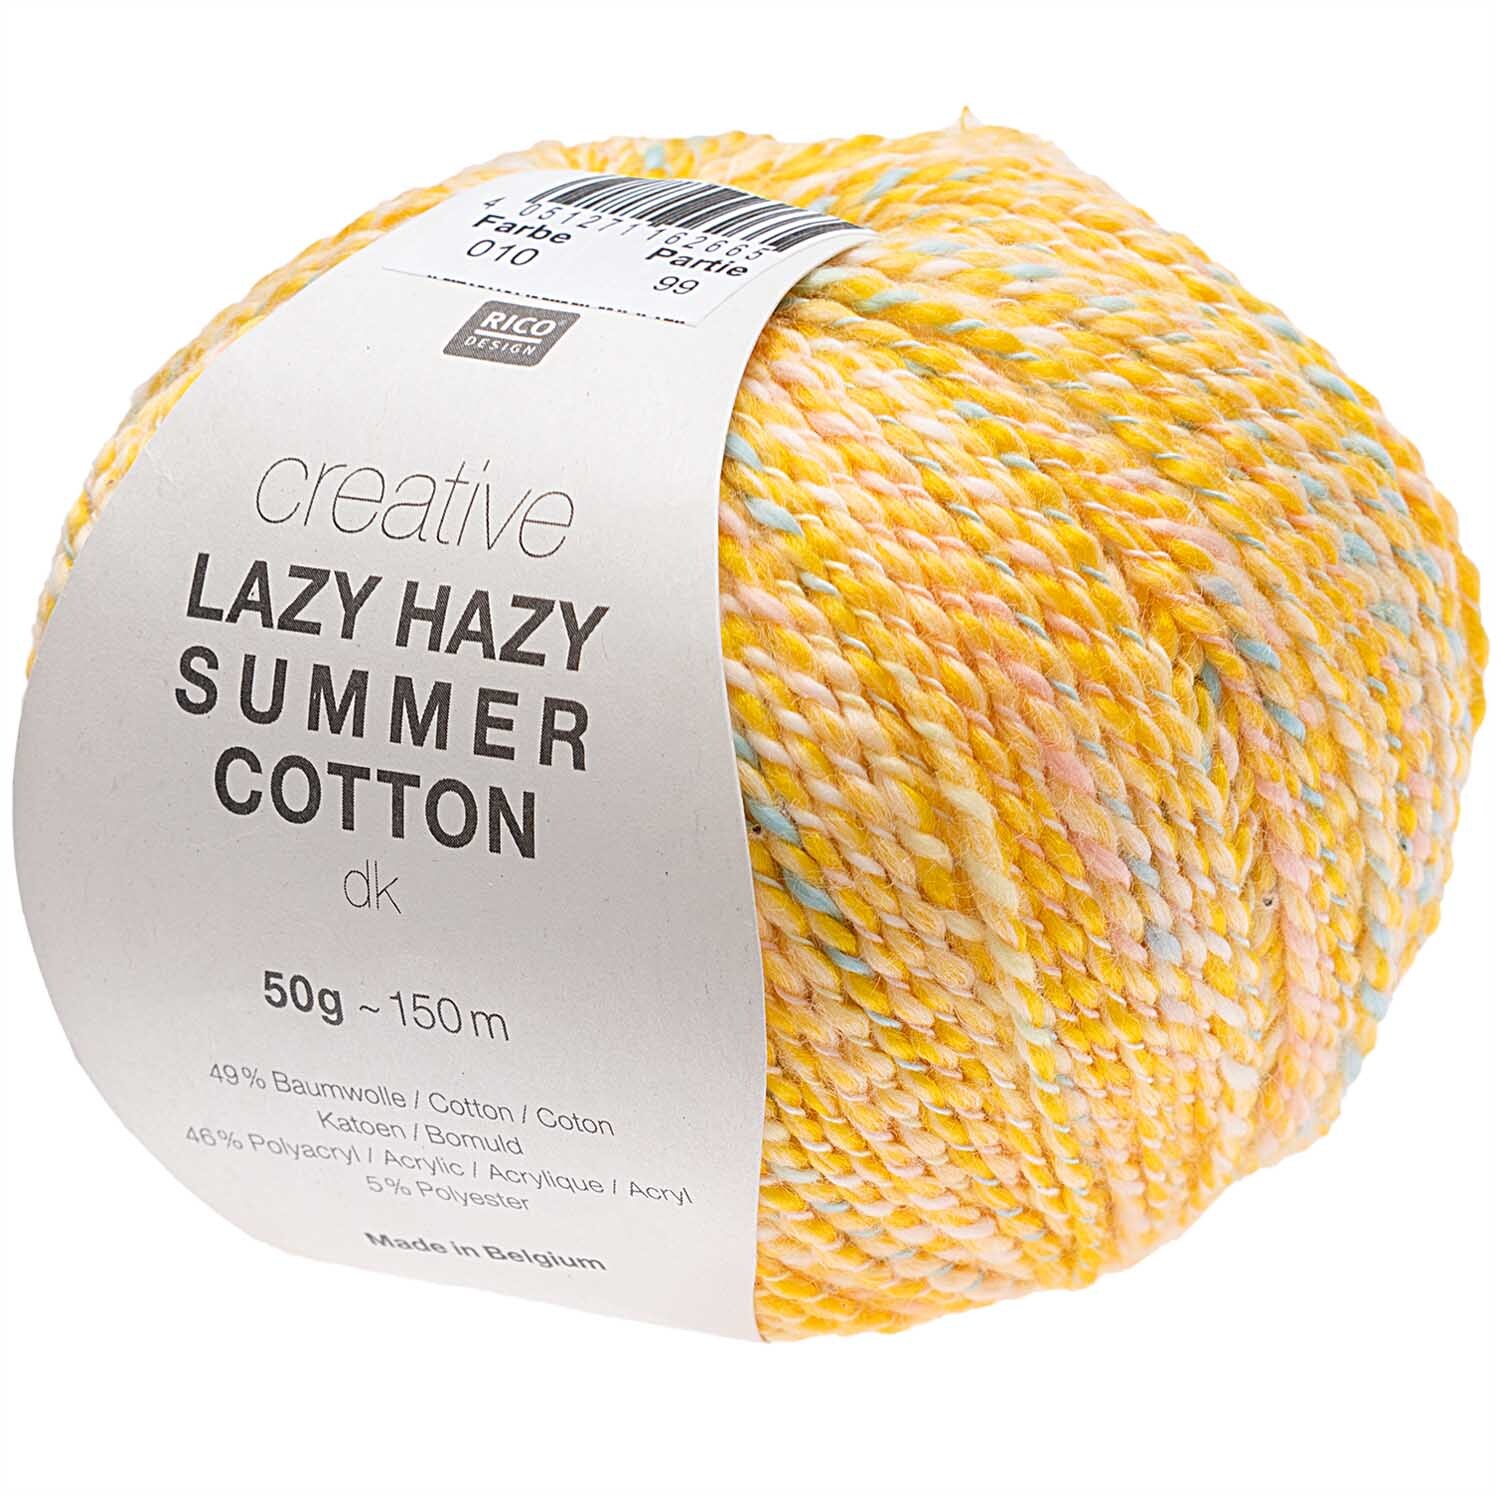 Creative Lazy Hazy Summer Cotton dk